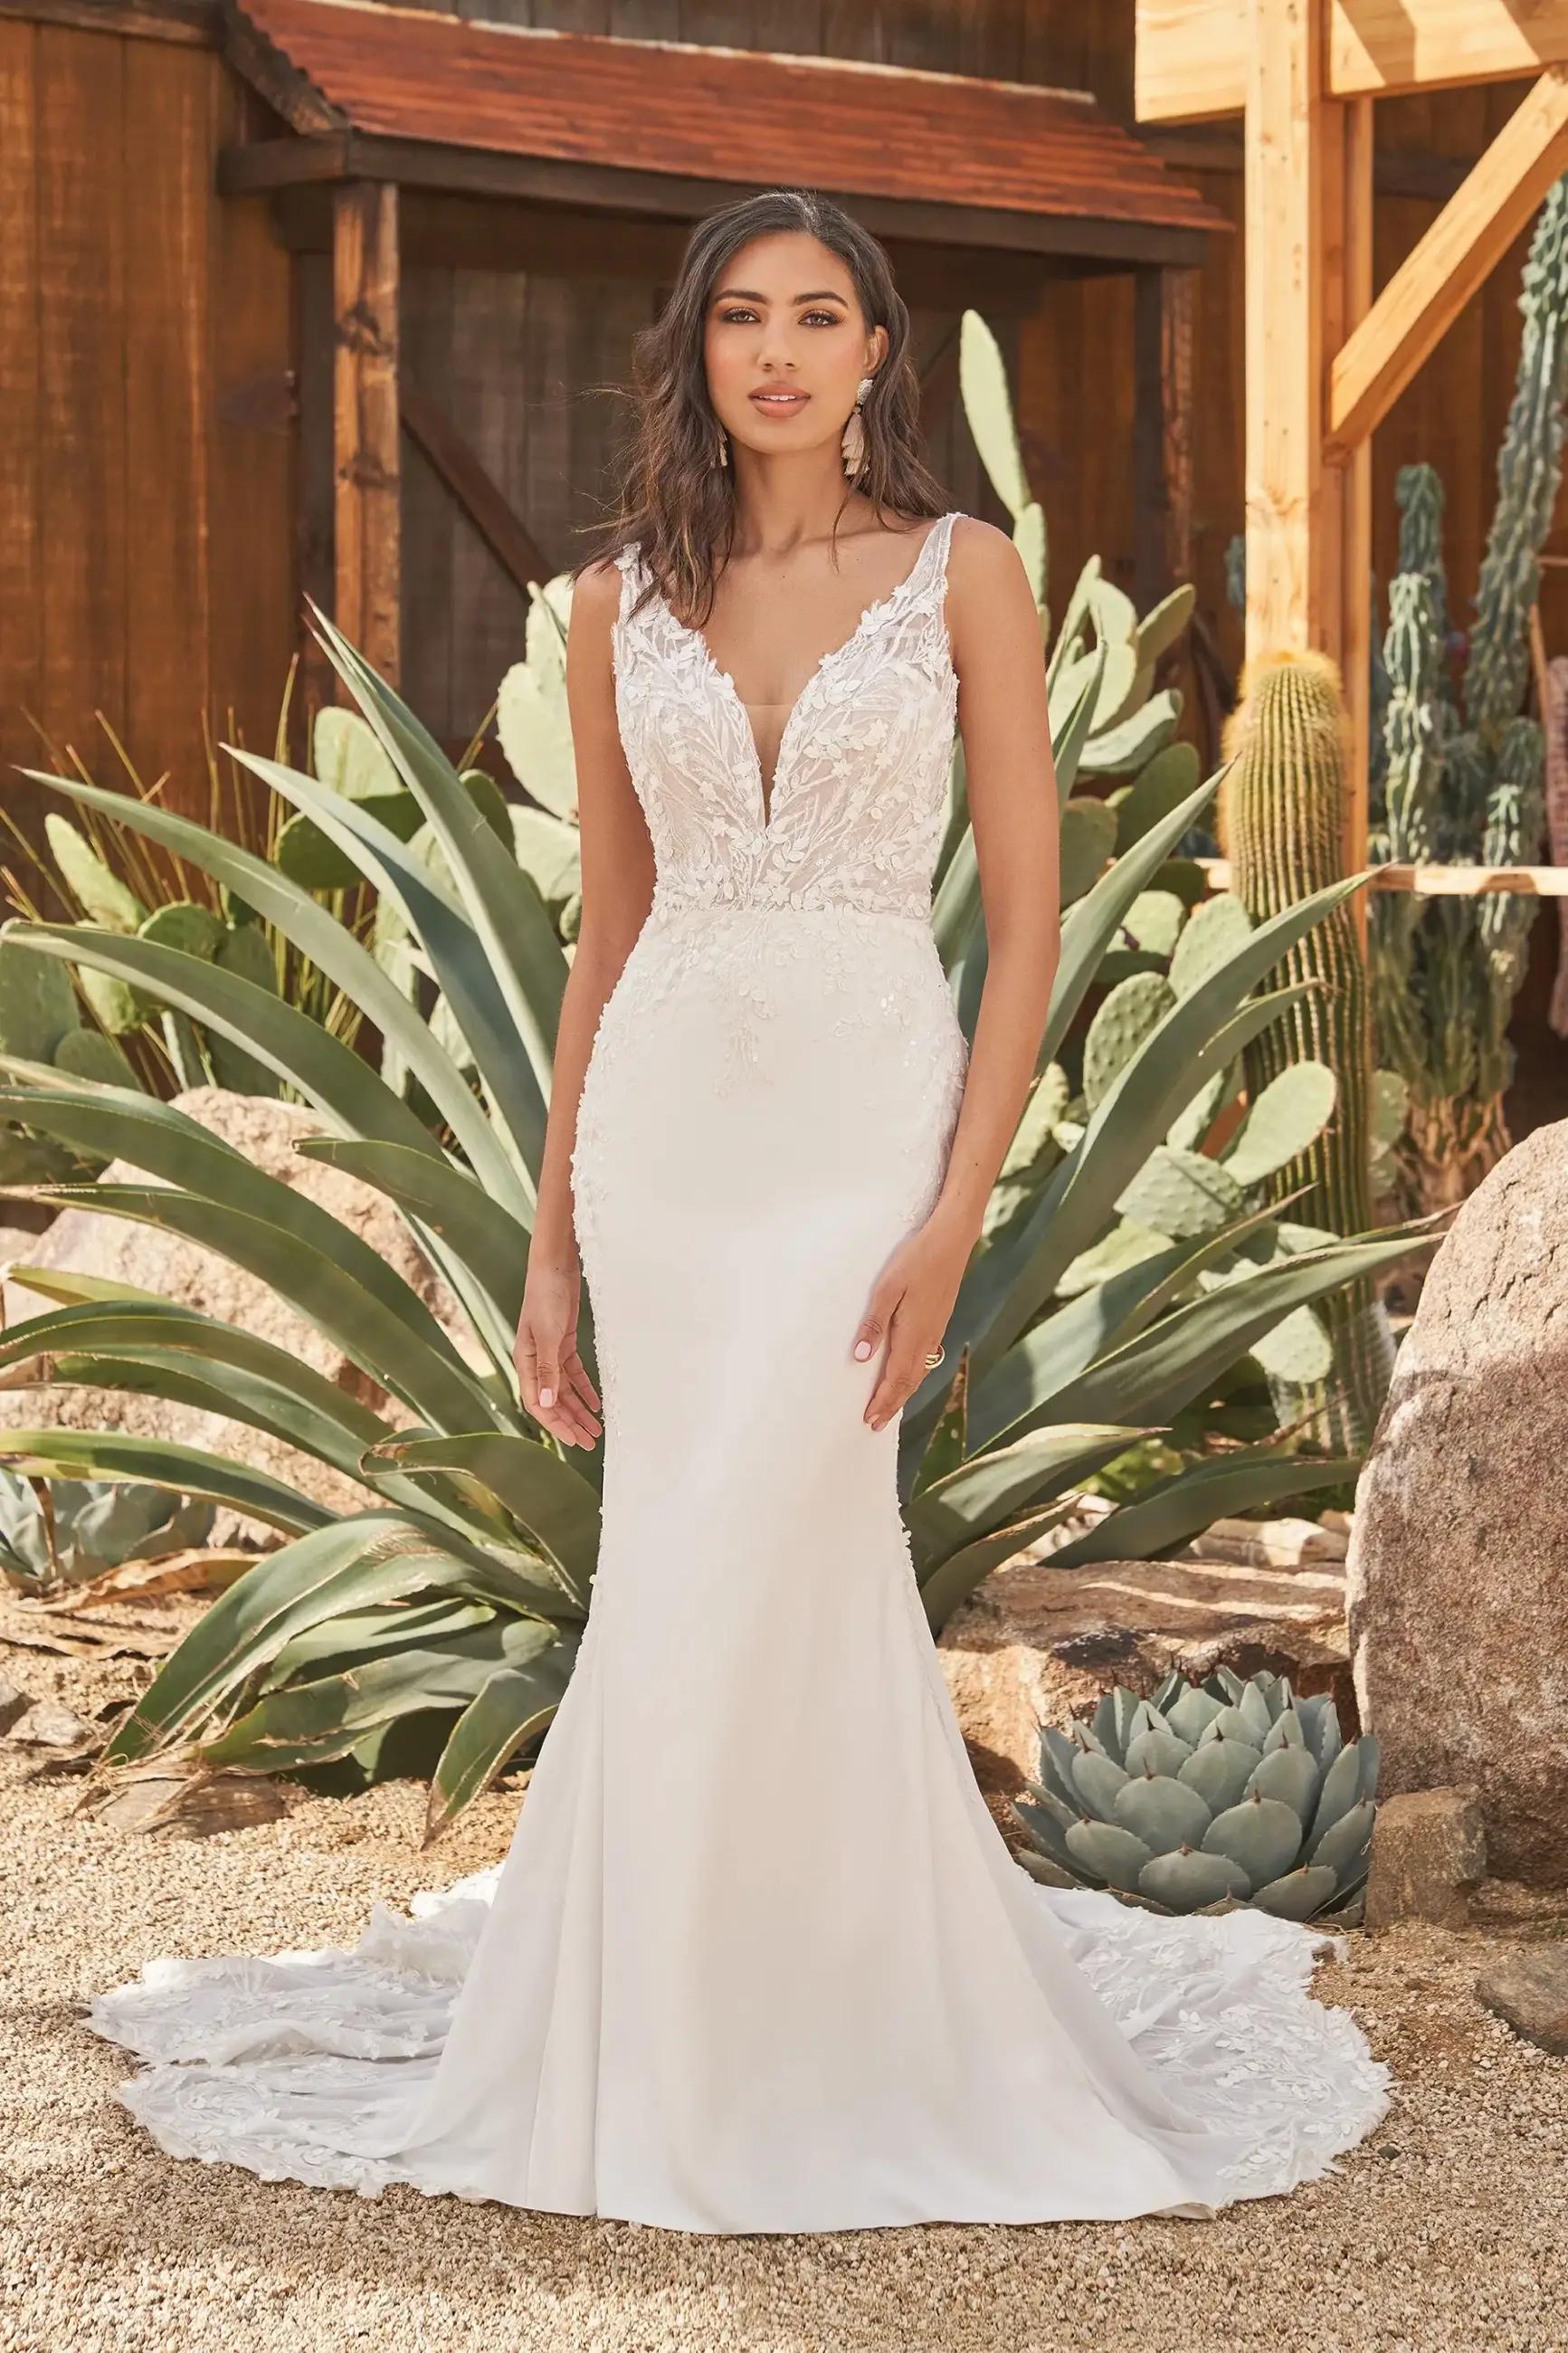 Model wearing a bridal Lillian West Bridal gown